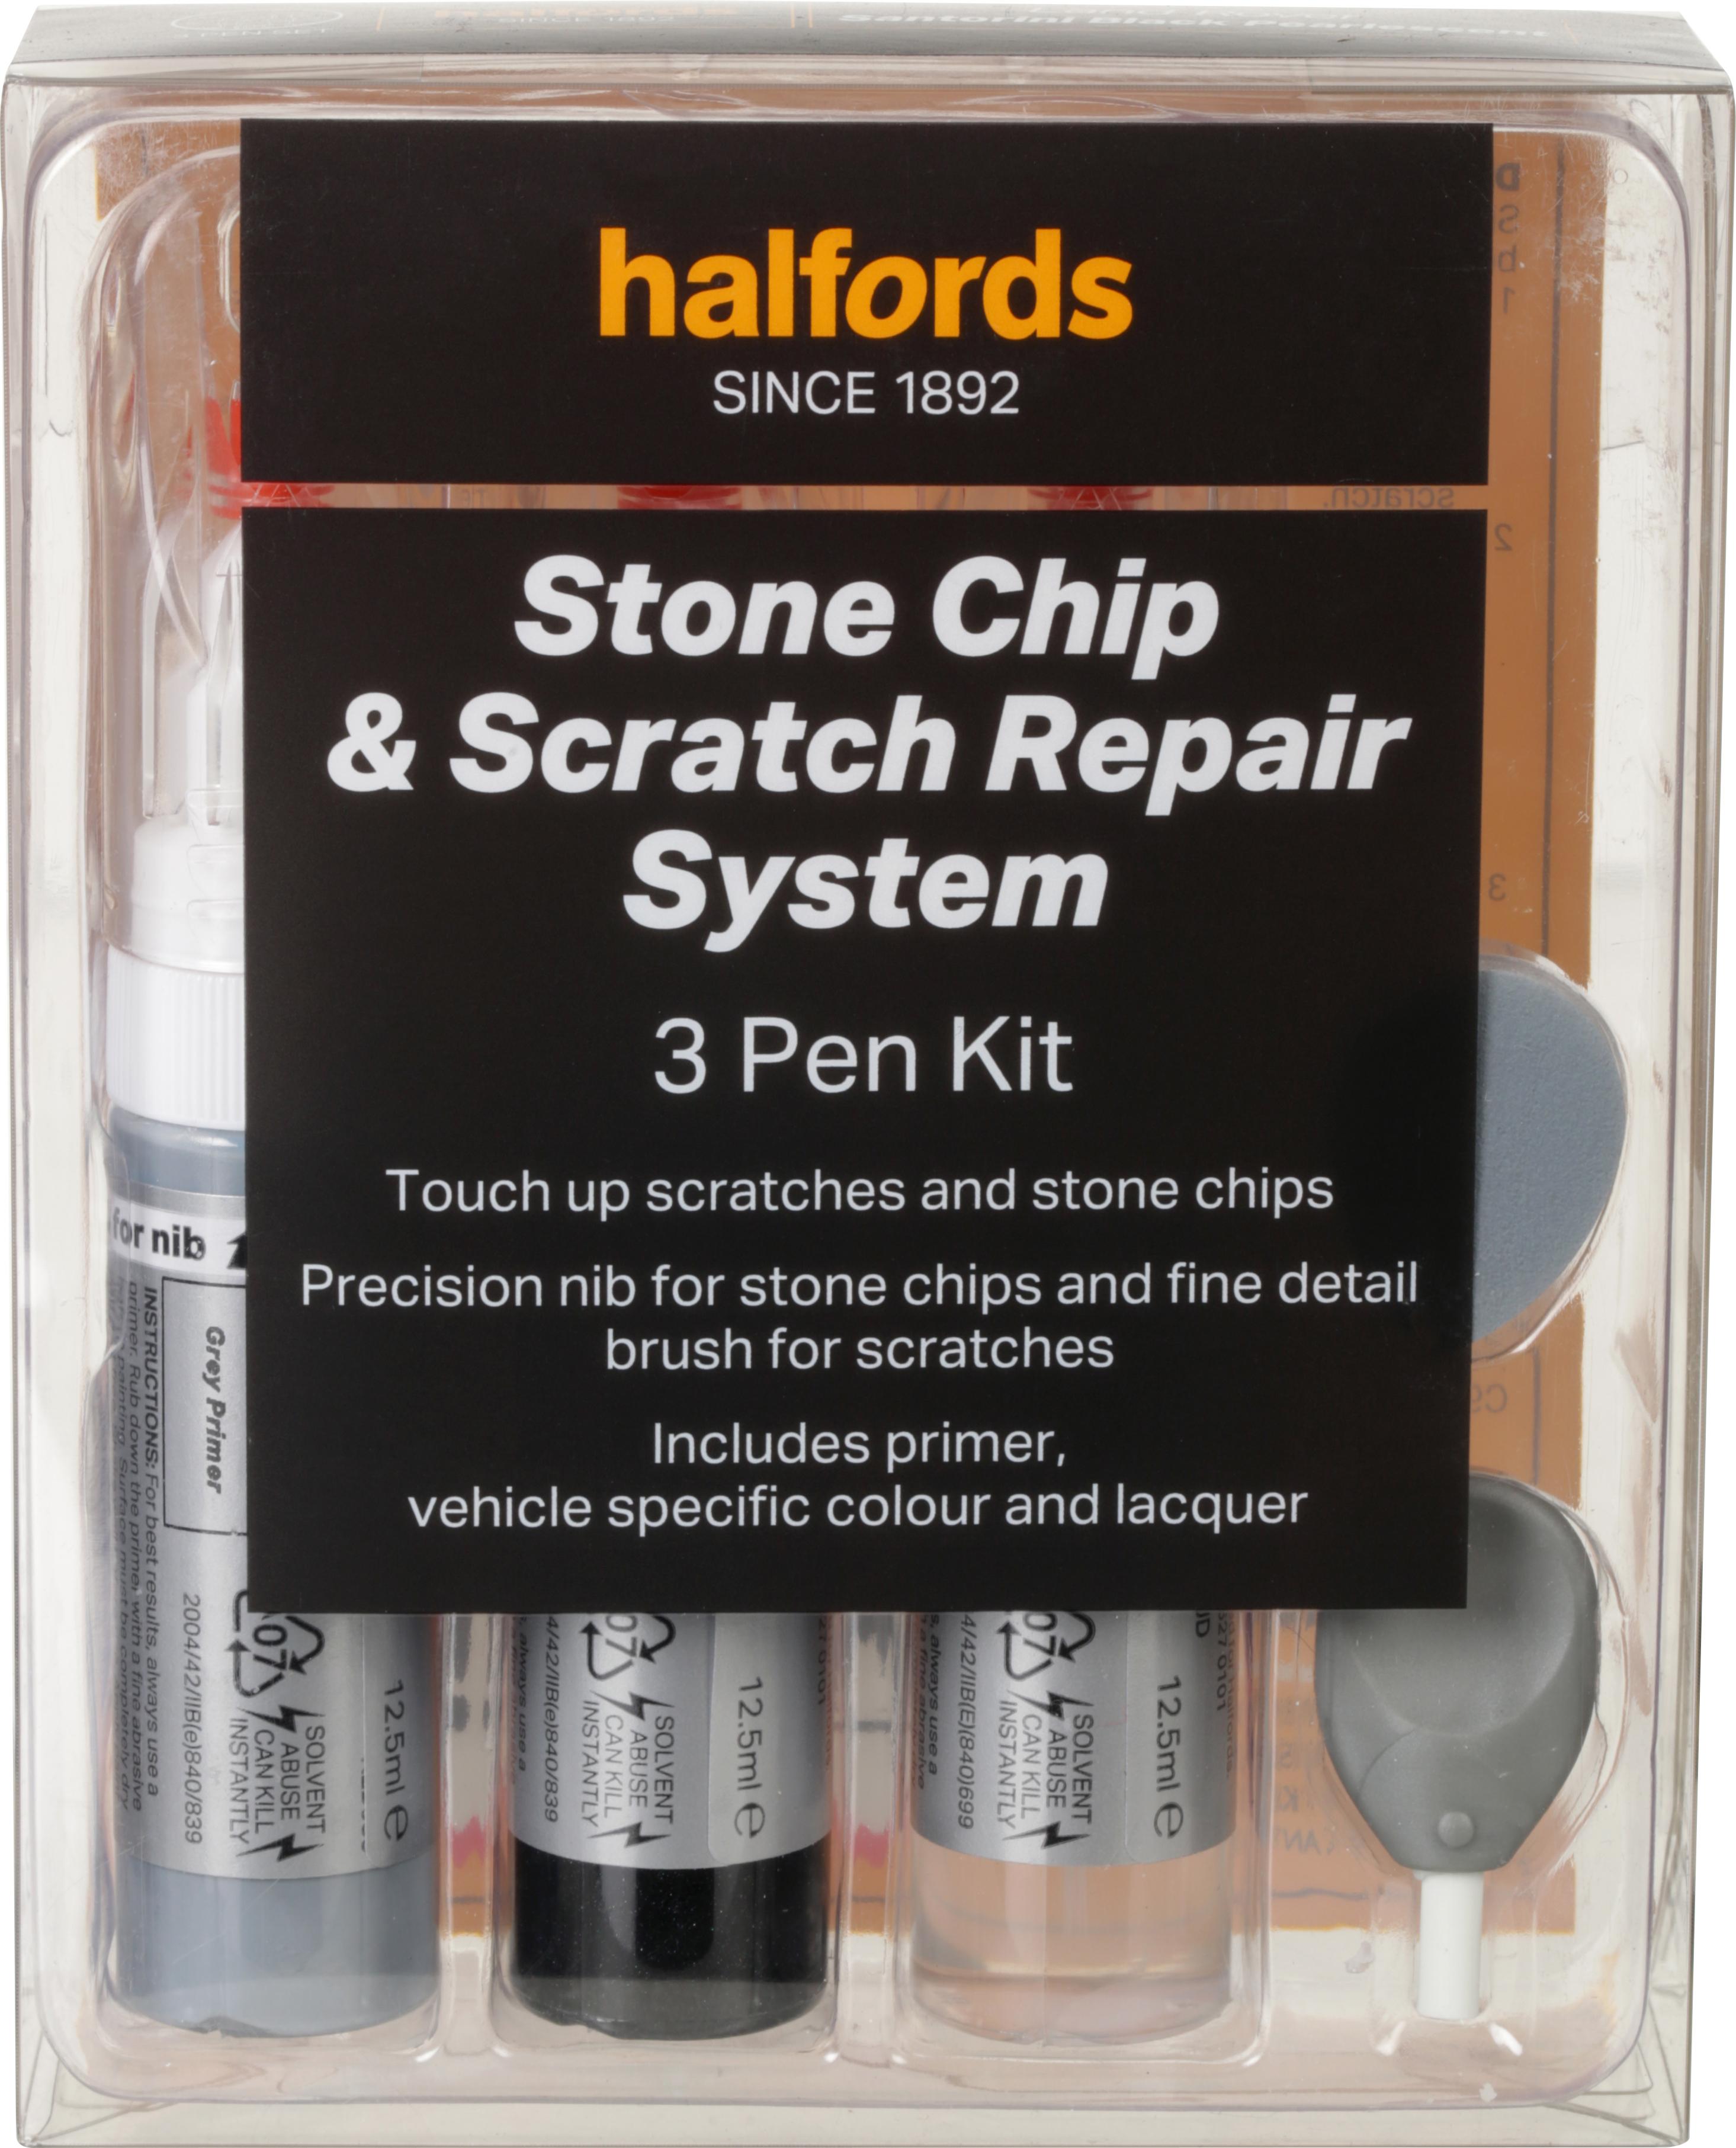 Halfords Landrover Santorini Black Scratch & Chip Repair Kit